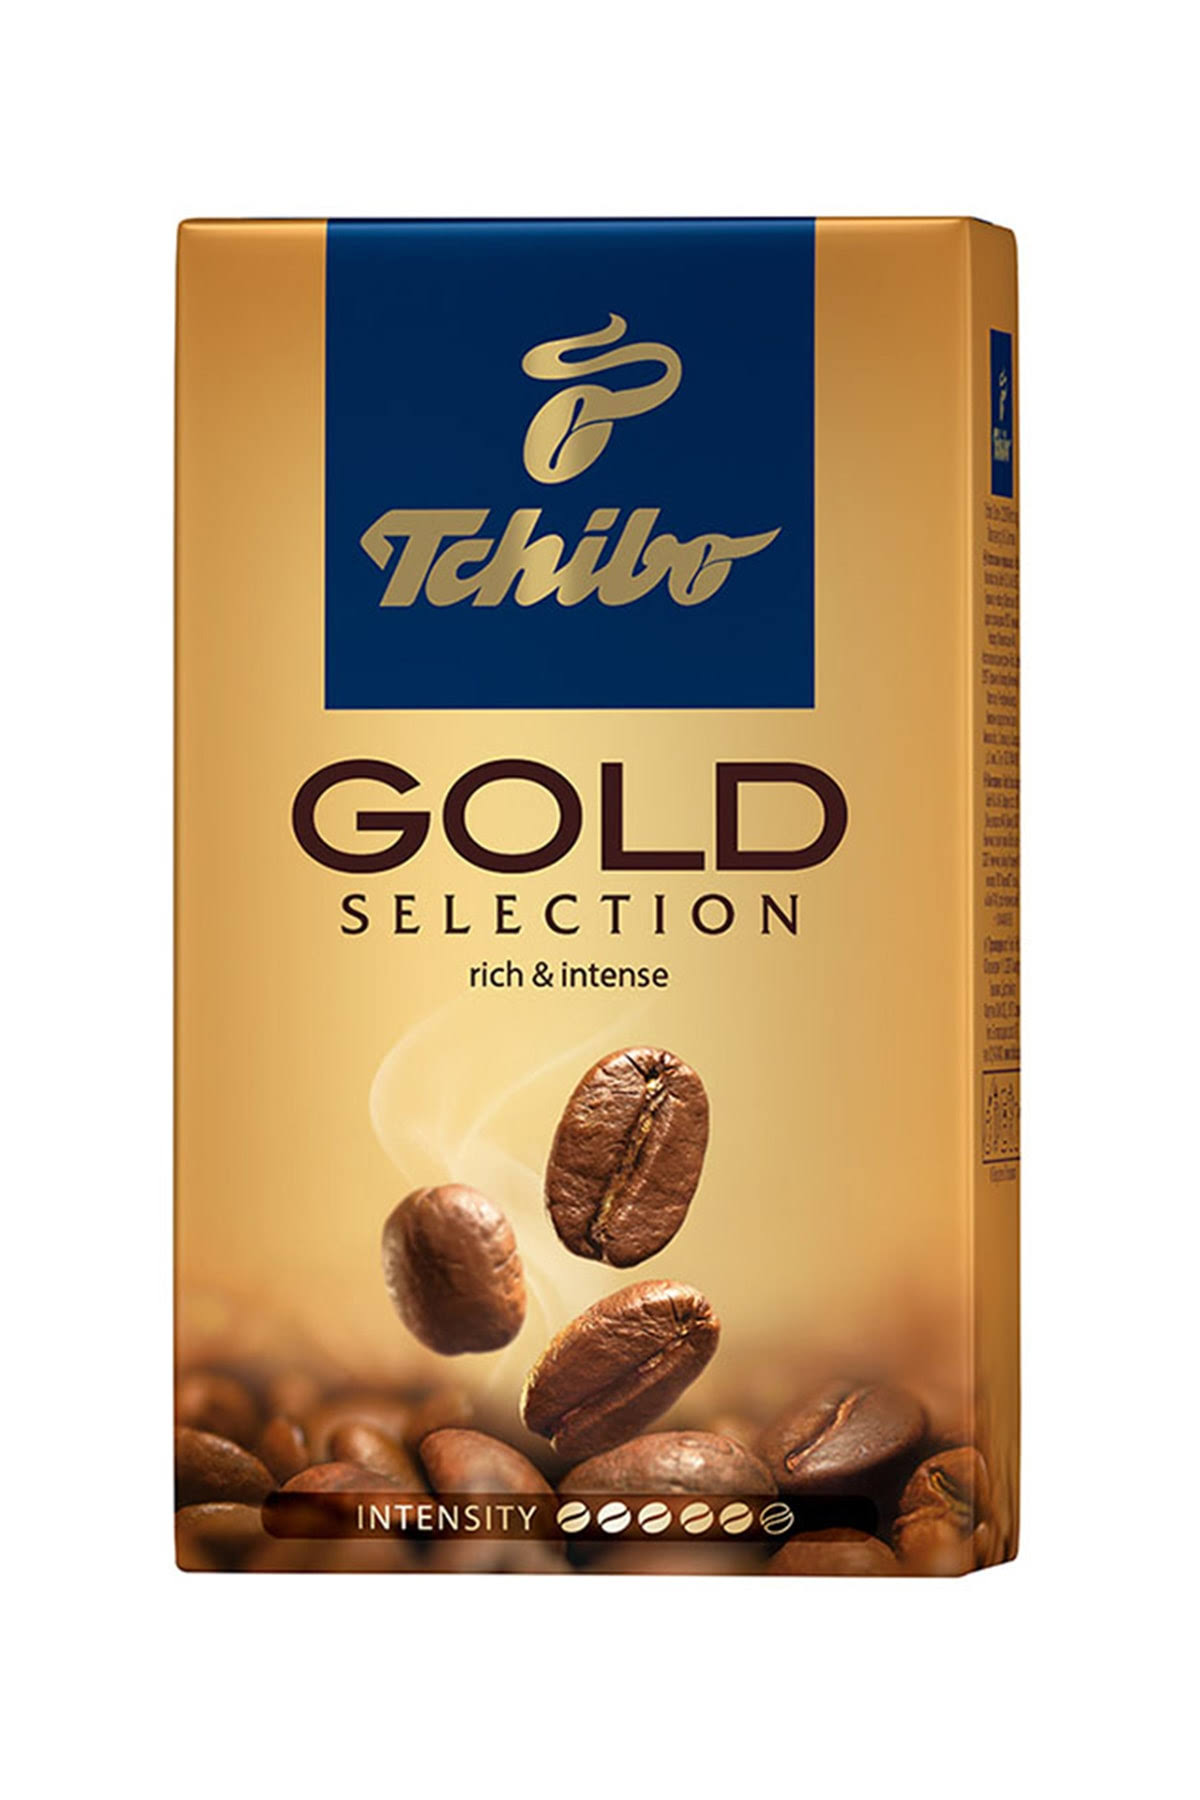 Tchibo Gold Selection Ground Coffee